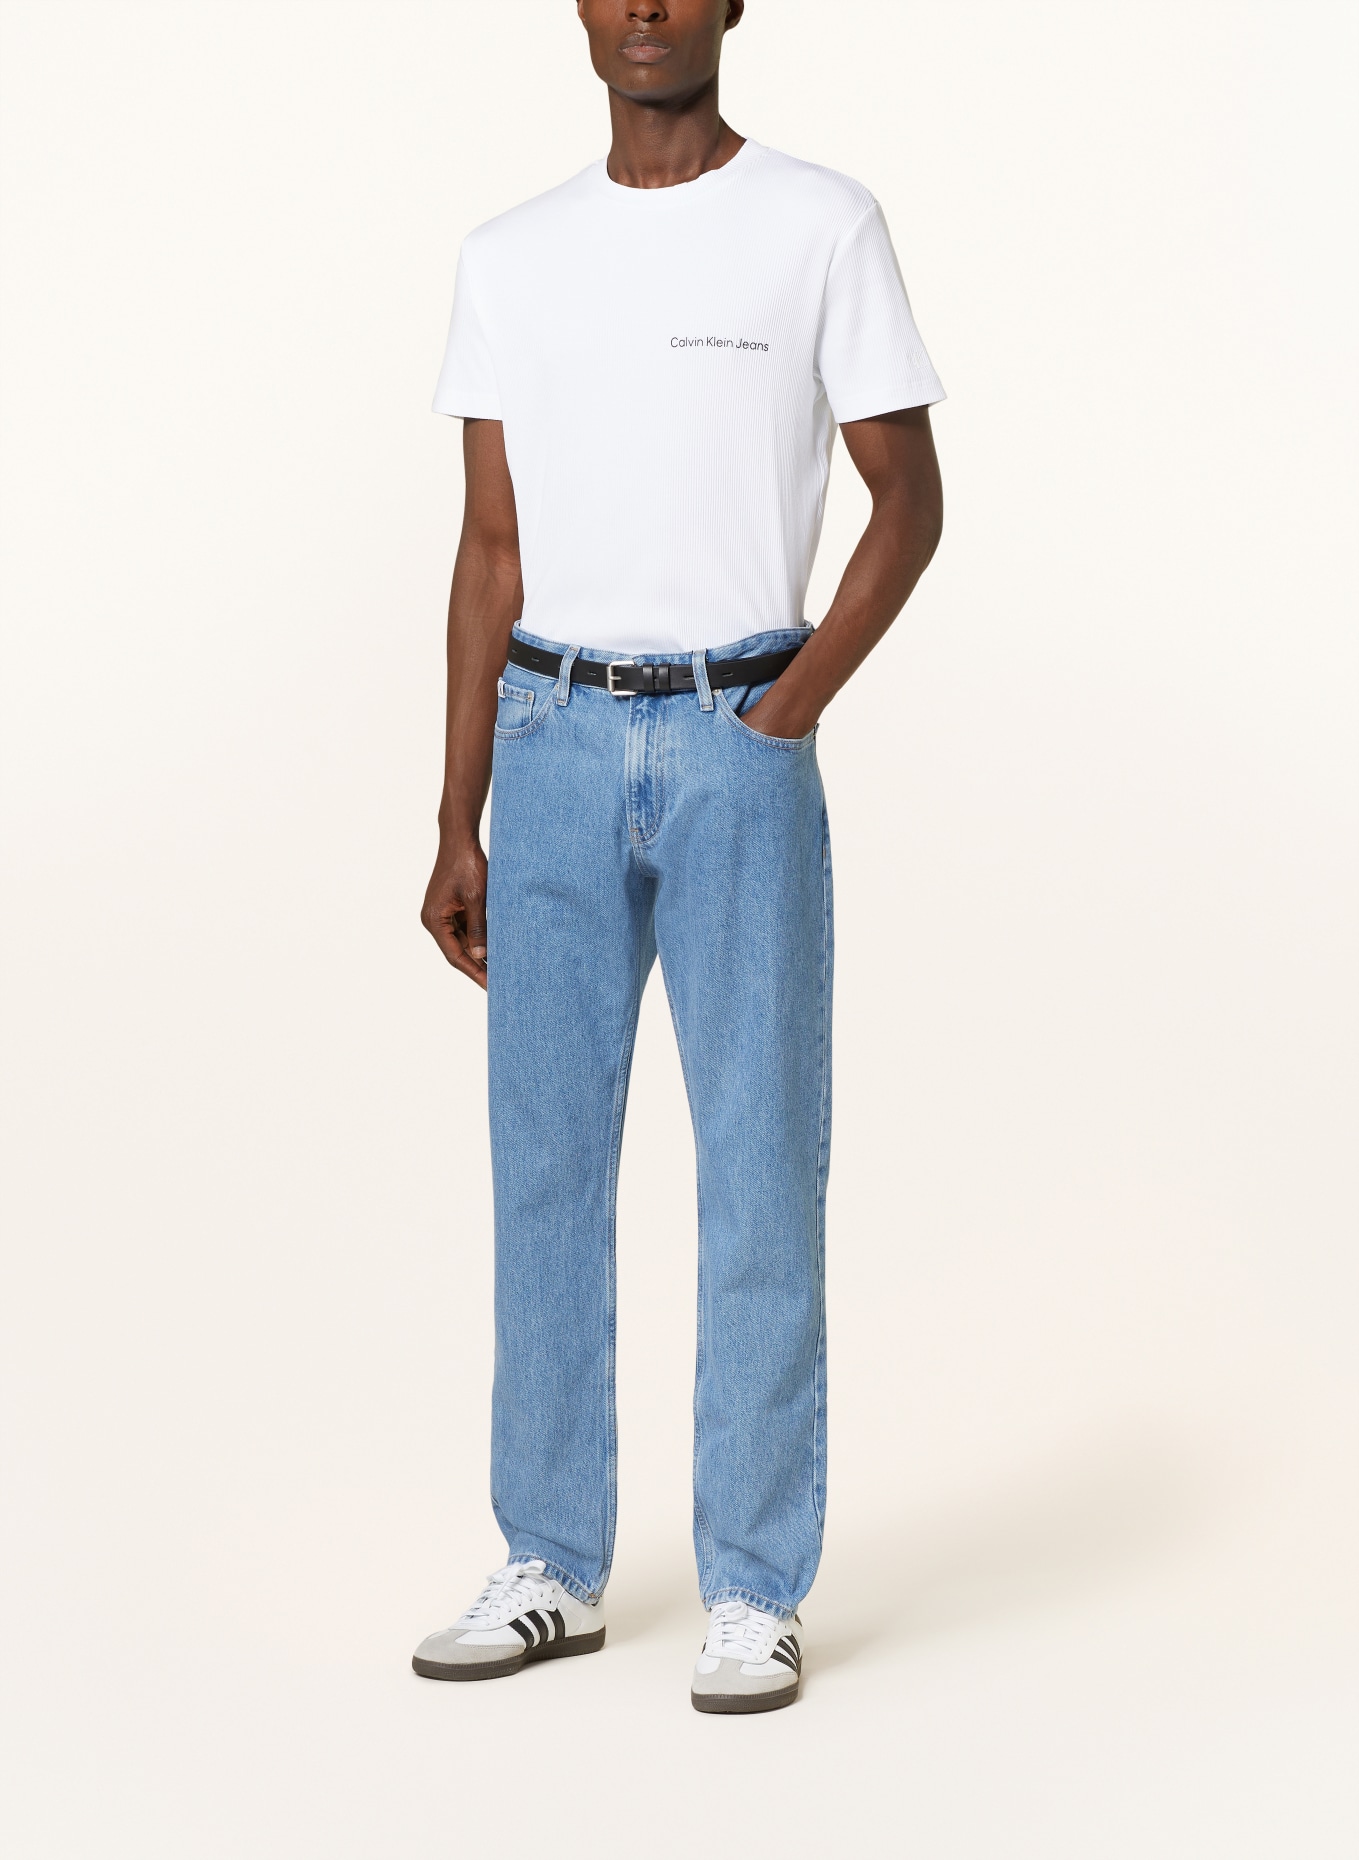 Calvin Klein in Jeans T-Shirt weiss